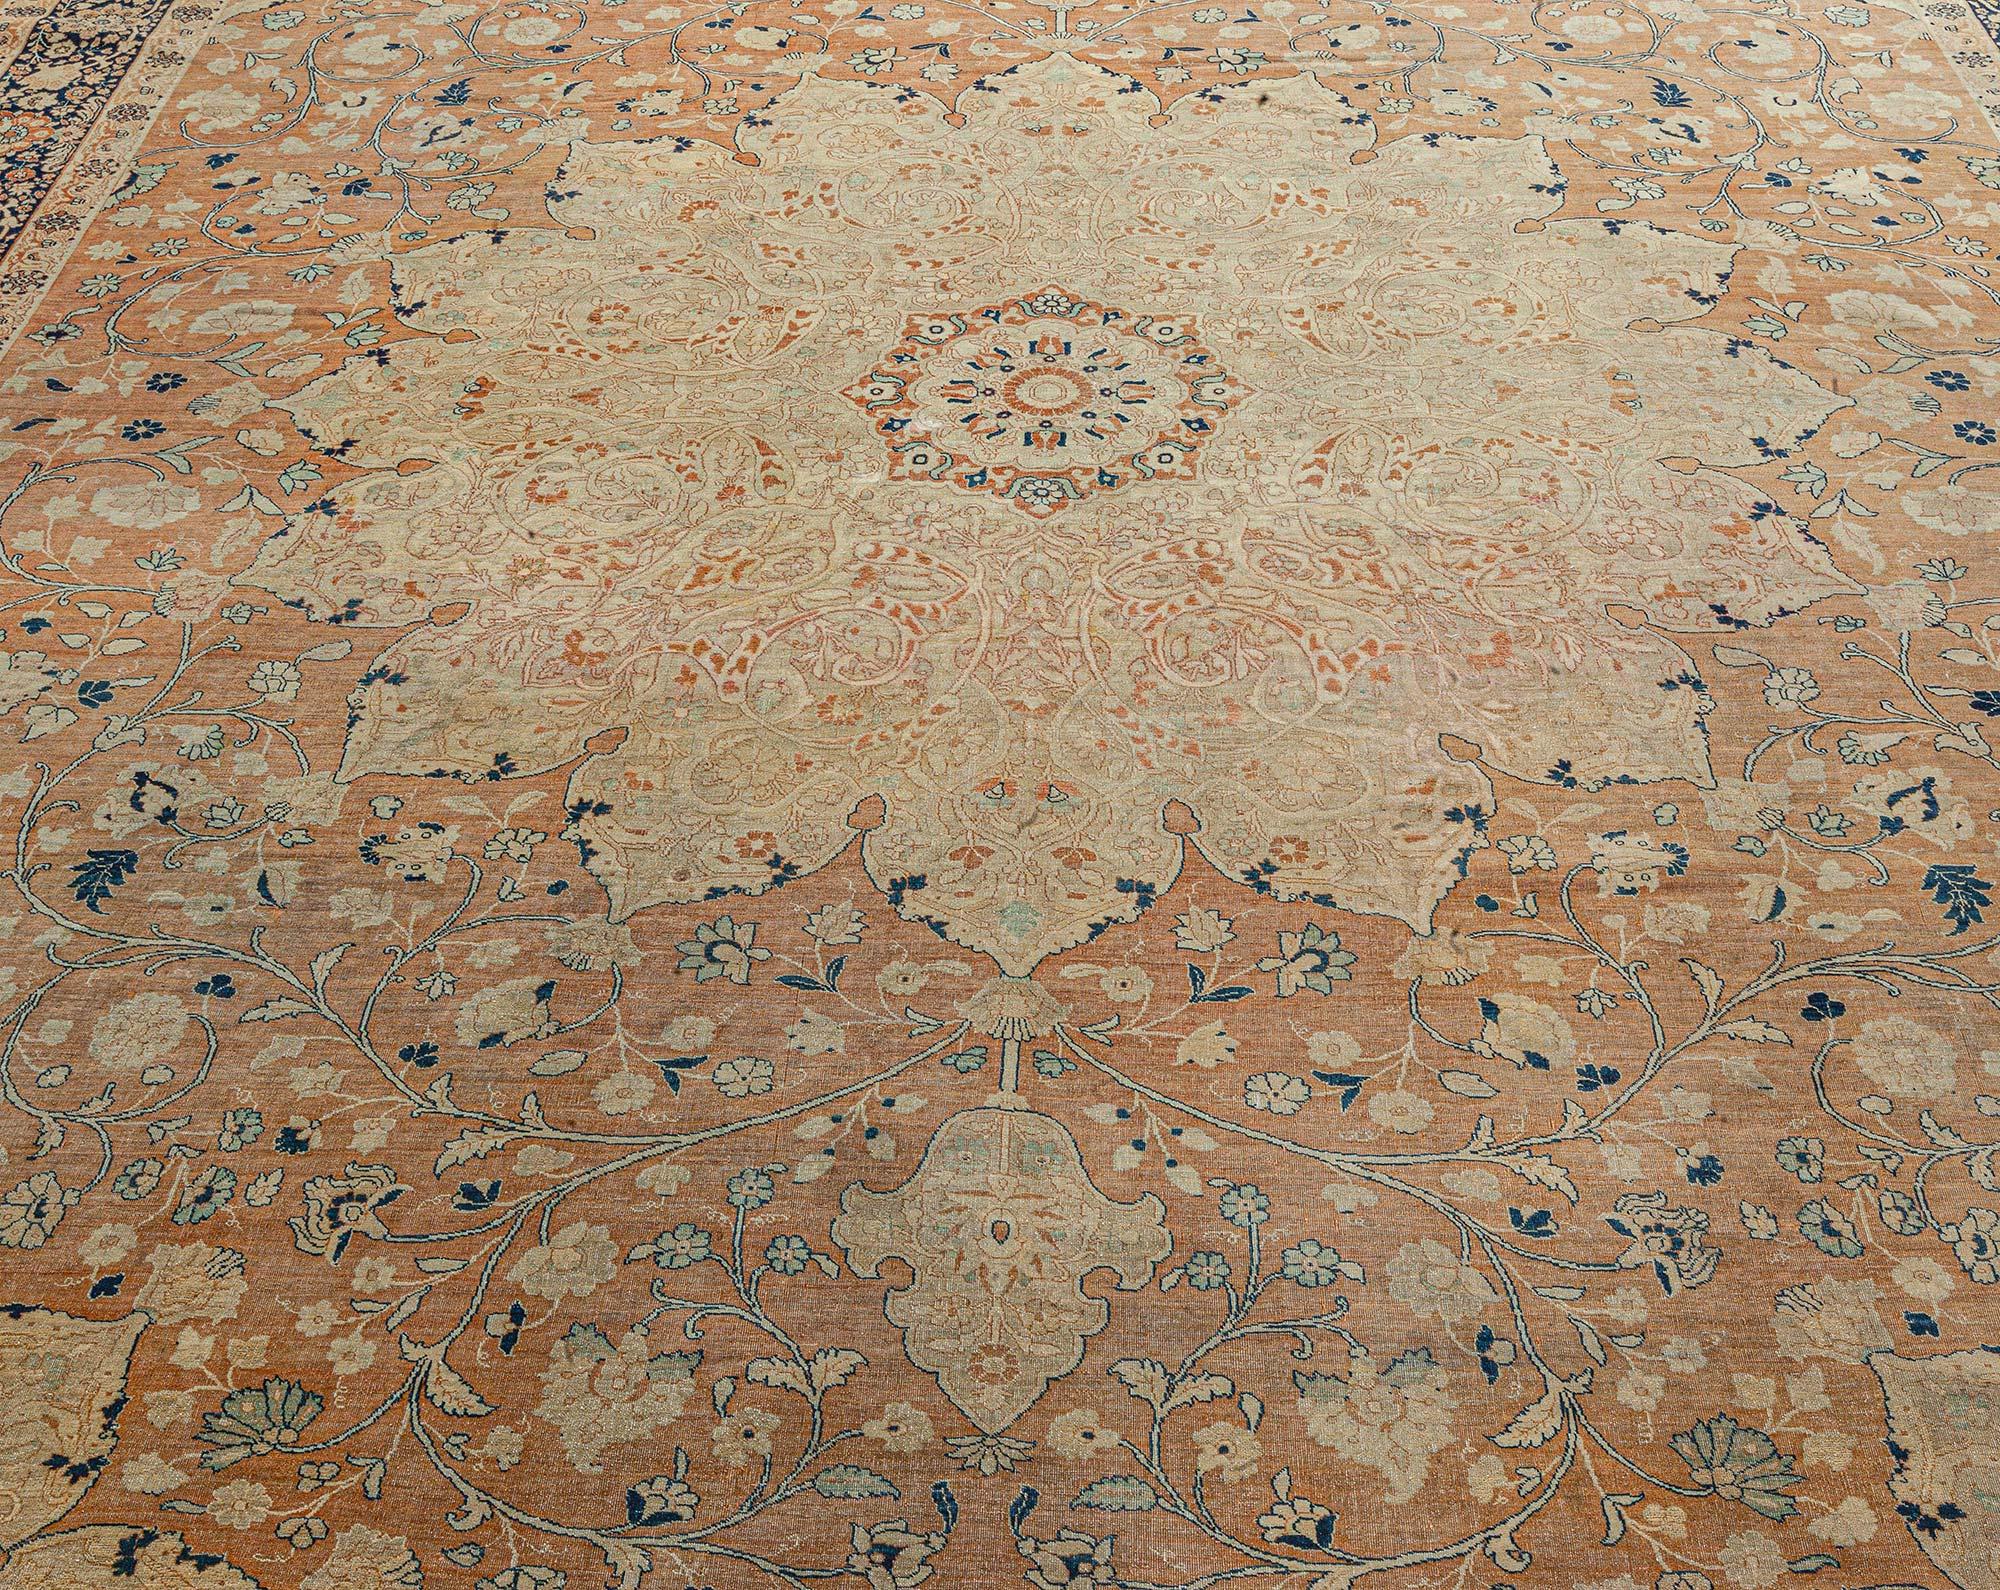 Antique Persian Tabriz rug 
Size: 11'2